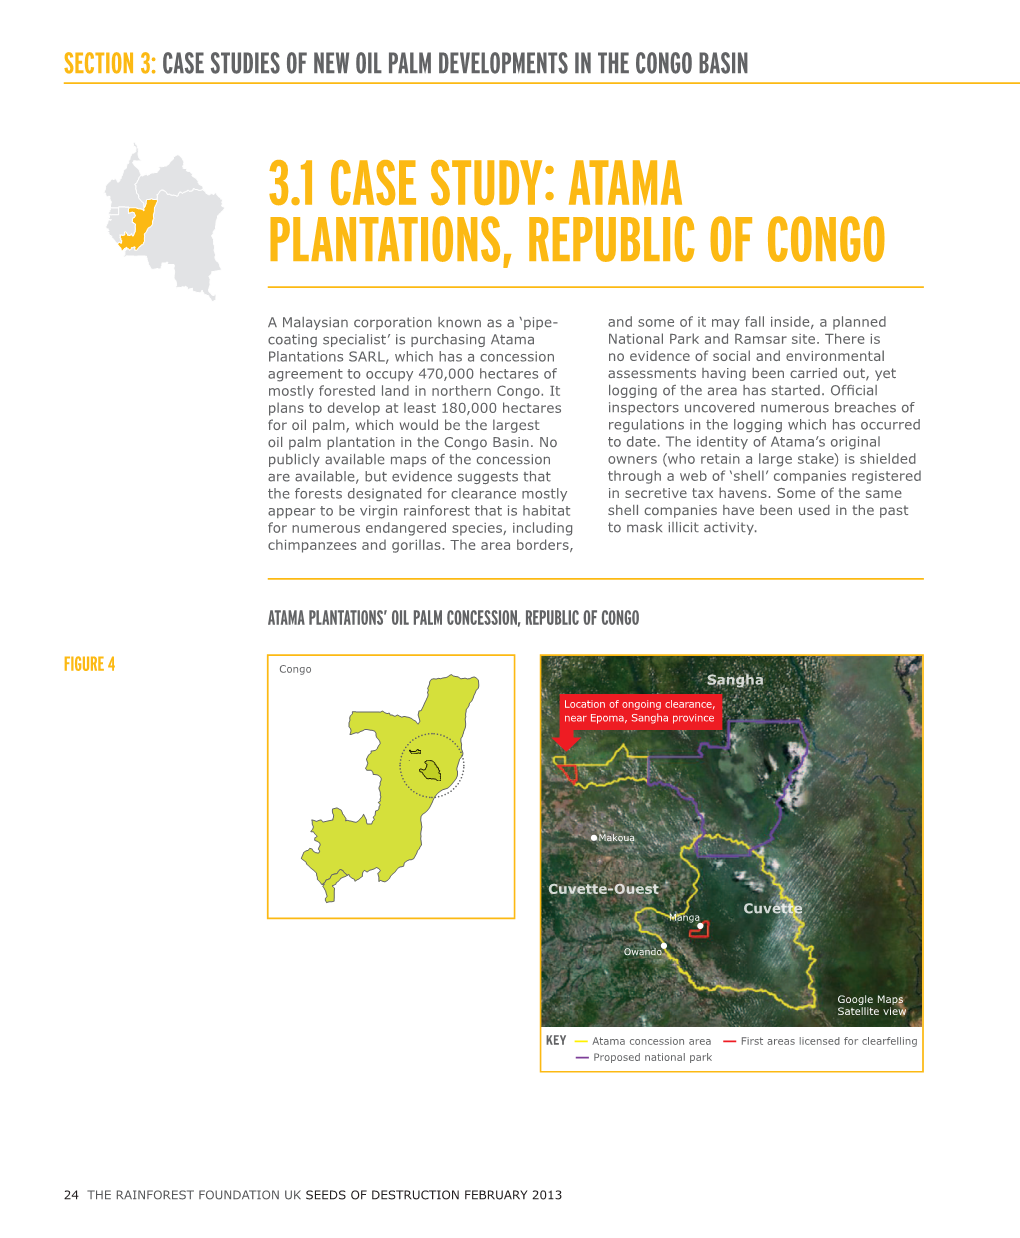 Atama Plantations, Republic of Congo